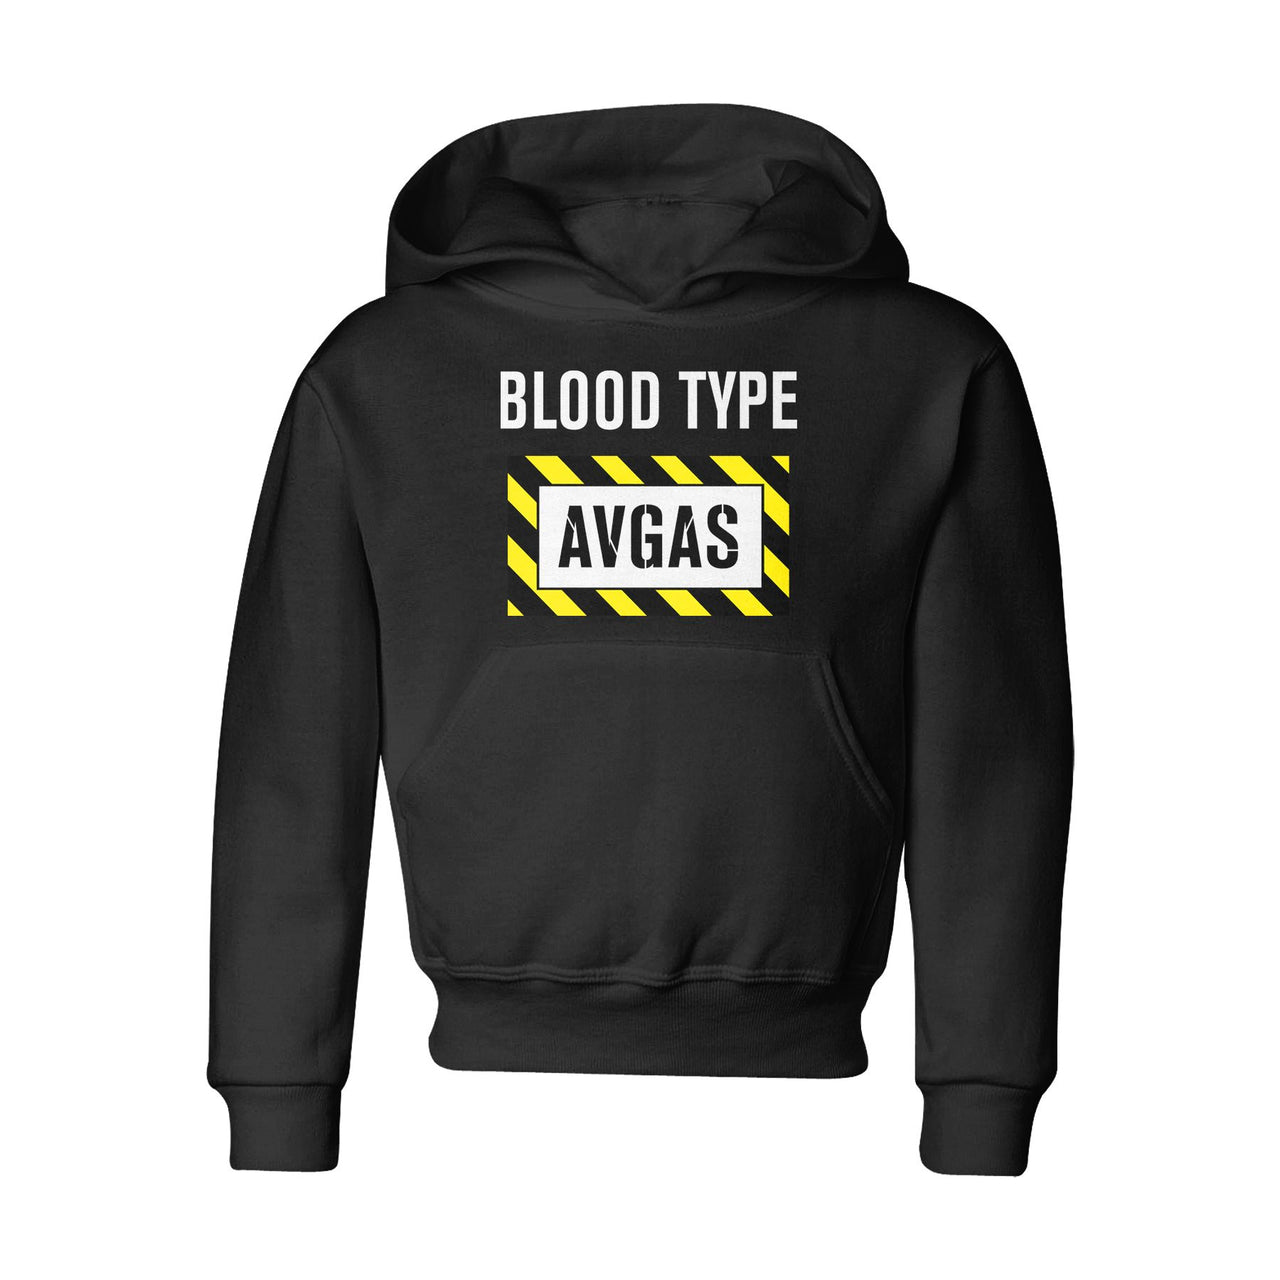 Blood Type AVGAS Designed "CHILDREN" Hoodies